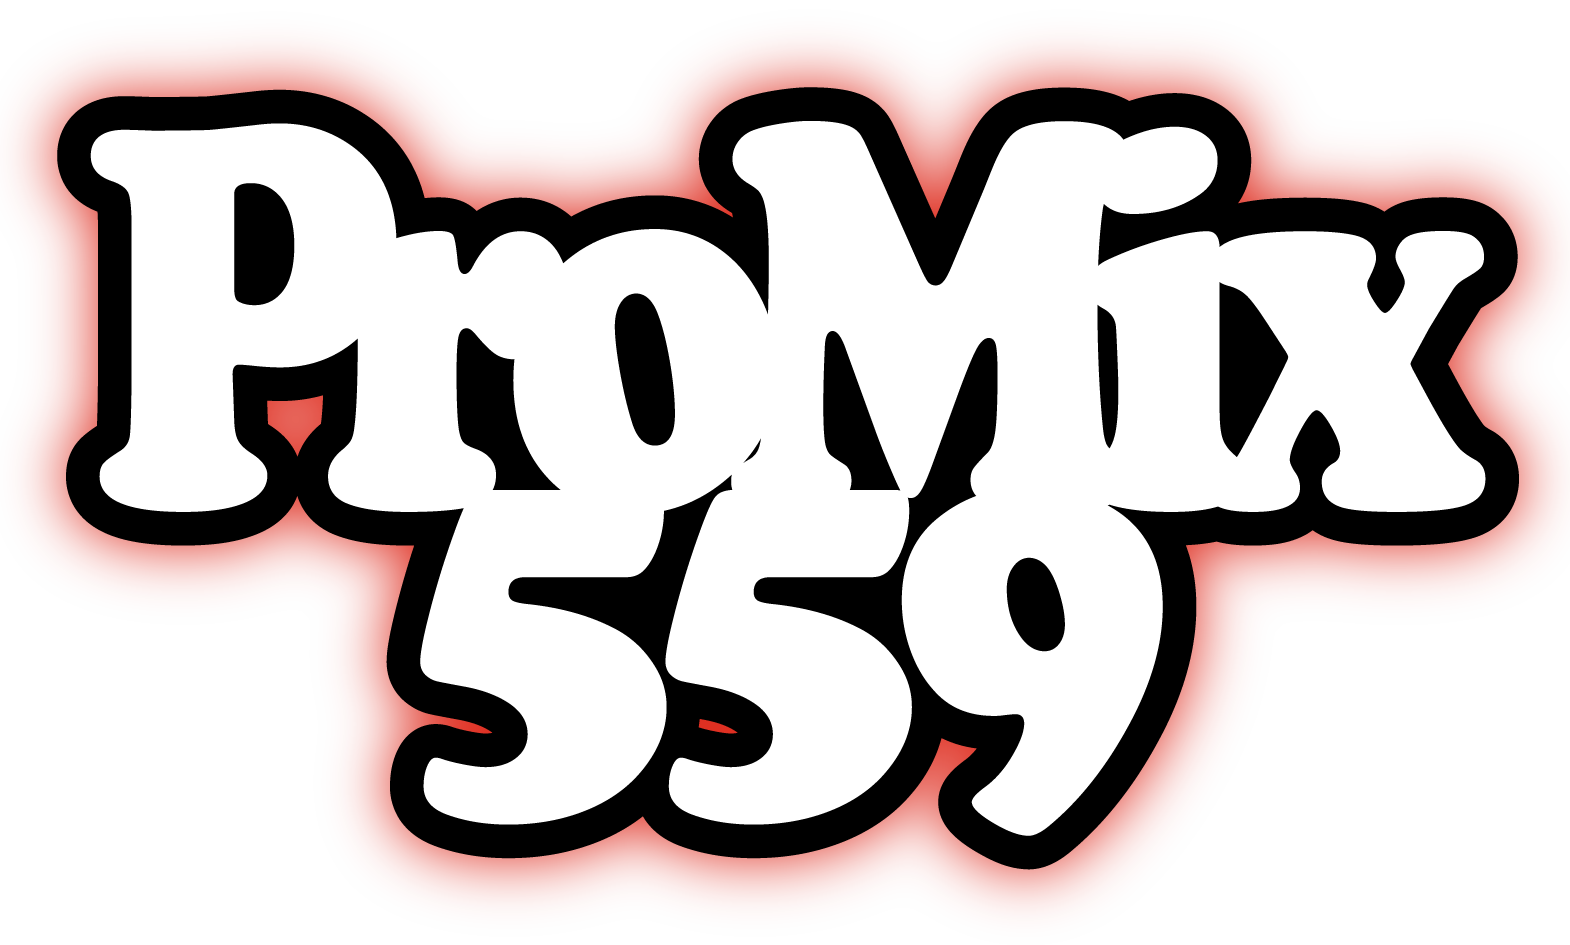 ProMix559